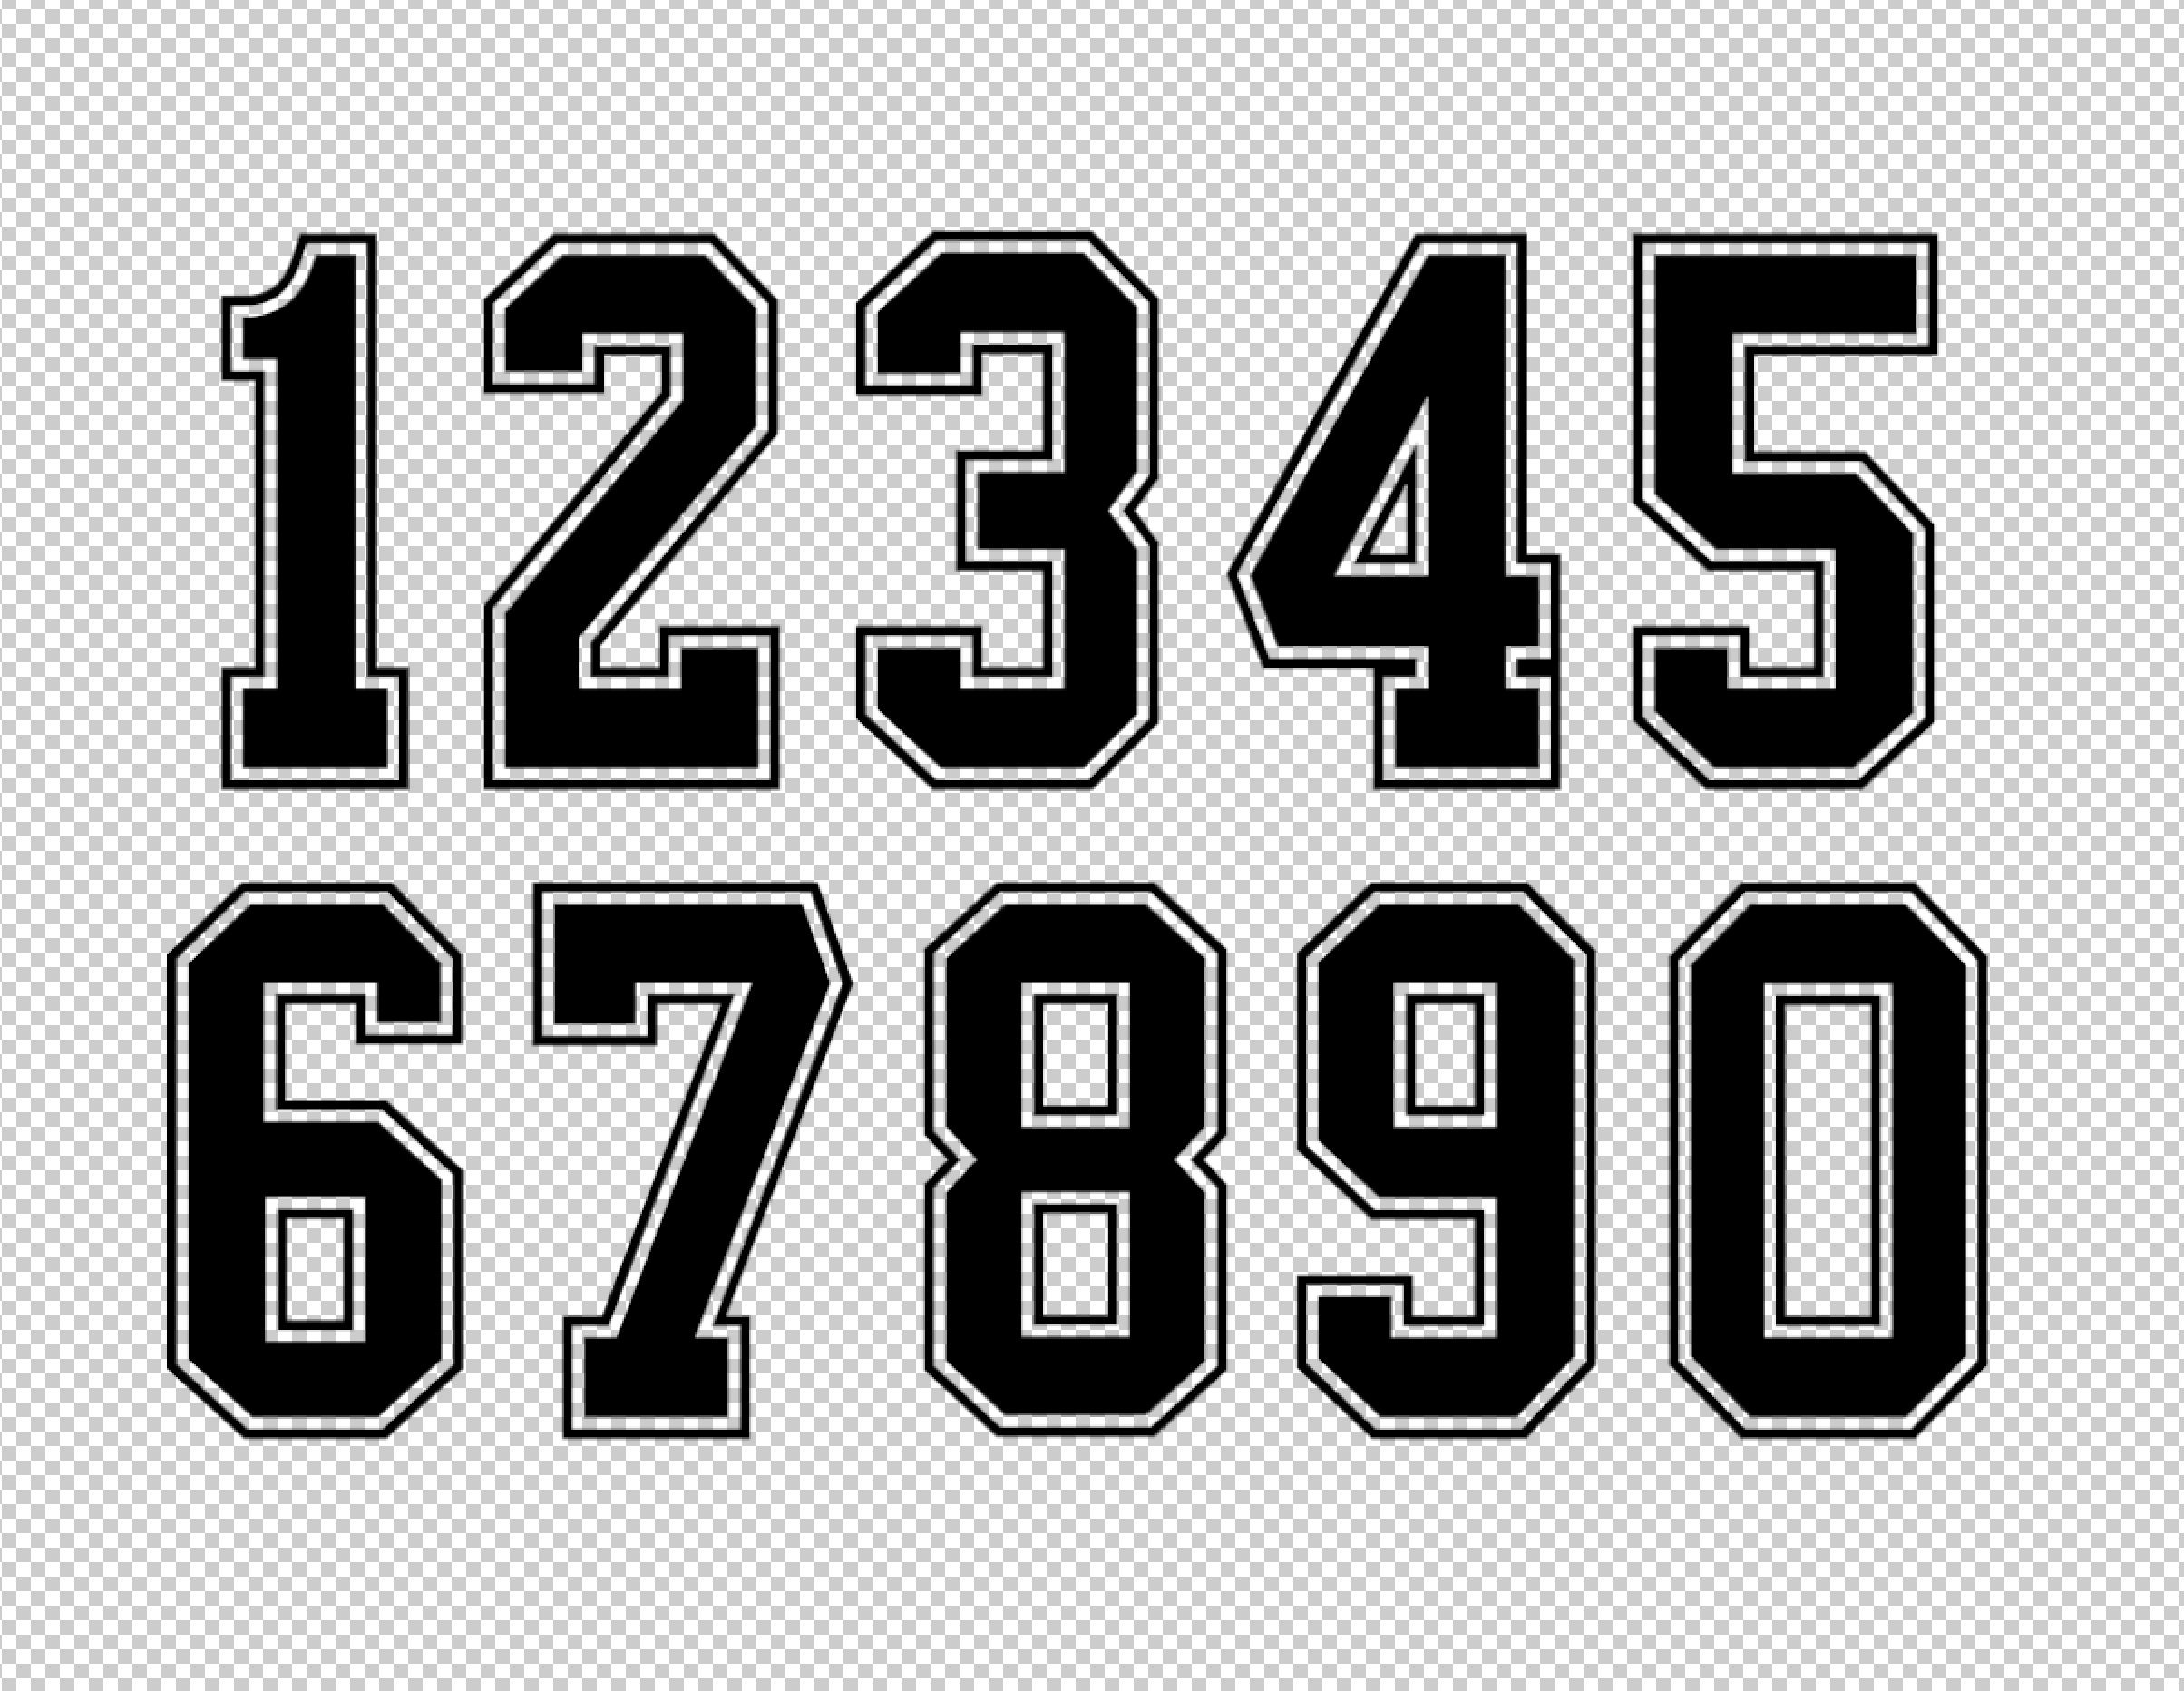 Jersey Numbers Svg Sport Numbers SVG Sport Numbers Cricut 